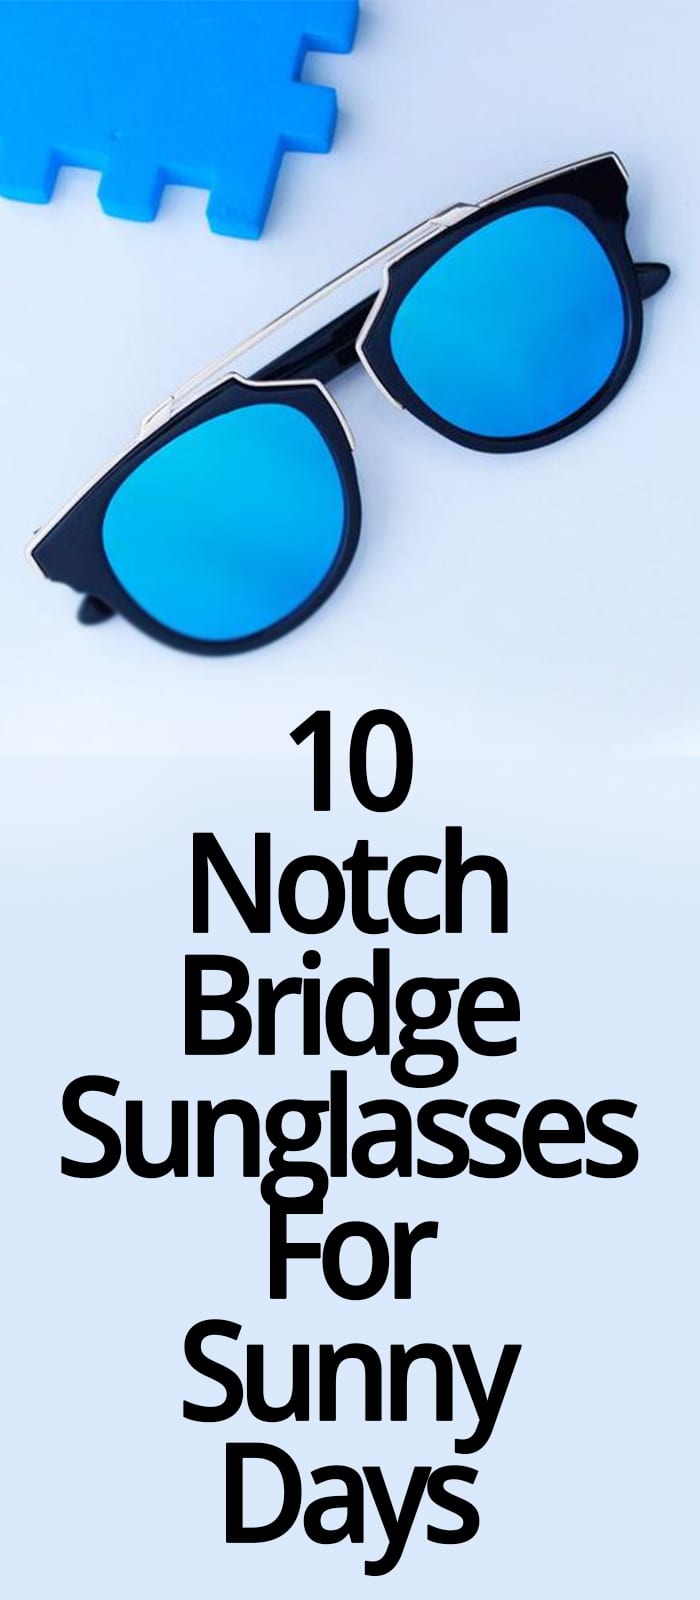 NOTCH BRIDGE SUNGLASSES